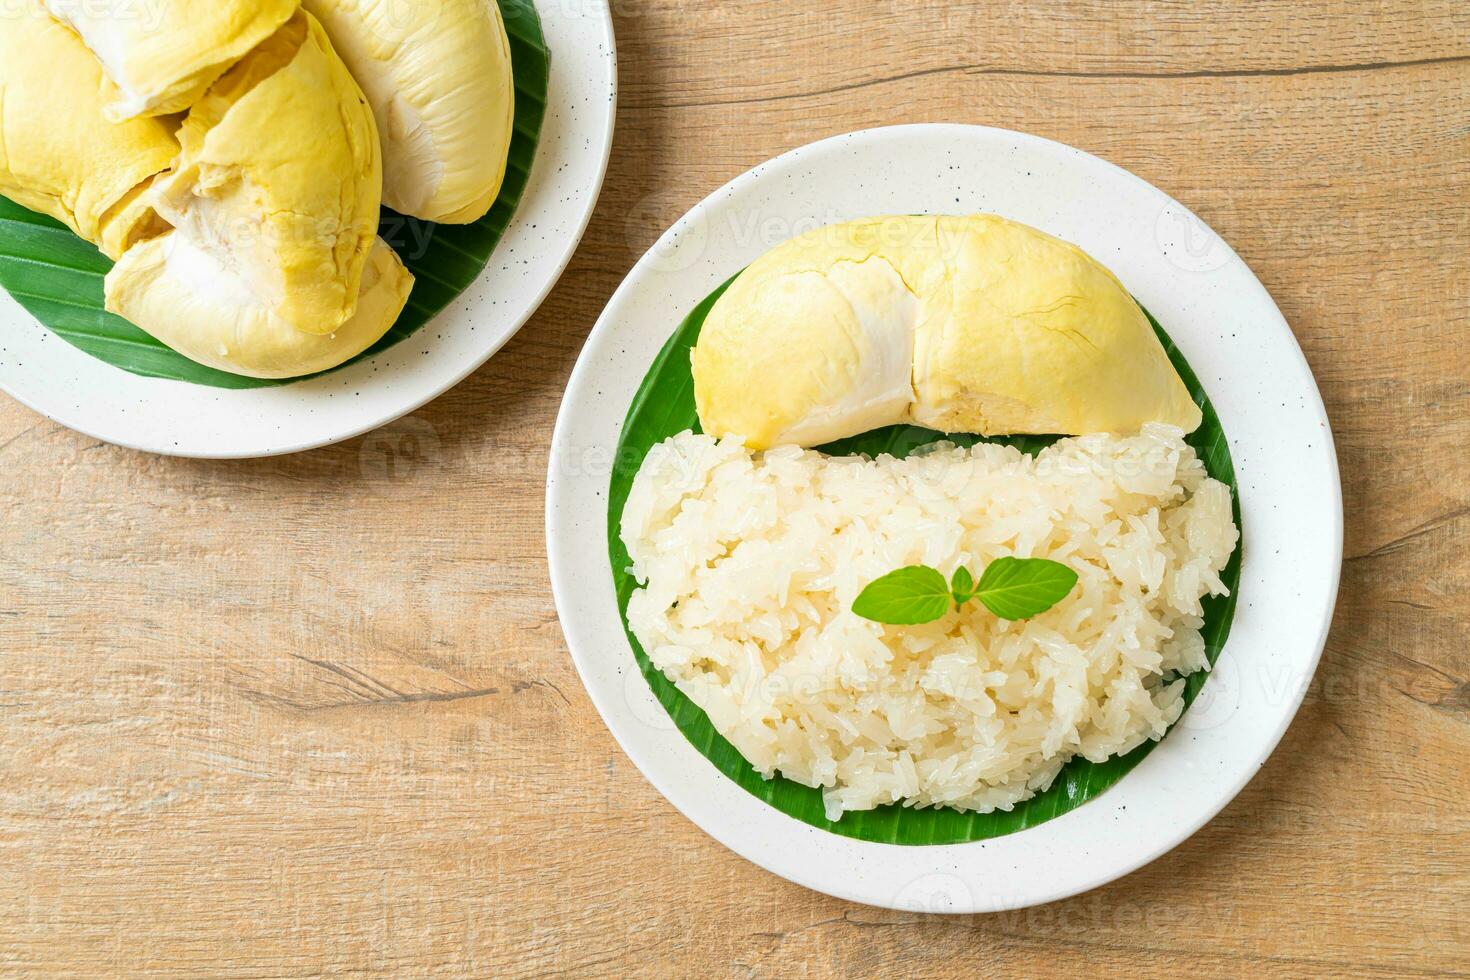 durian klibbigt ris på tallrik foto